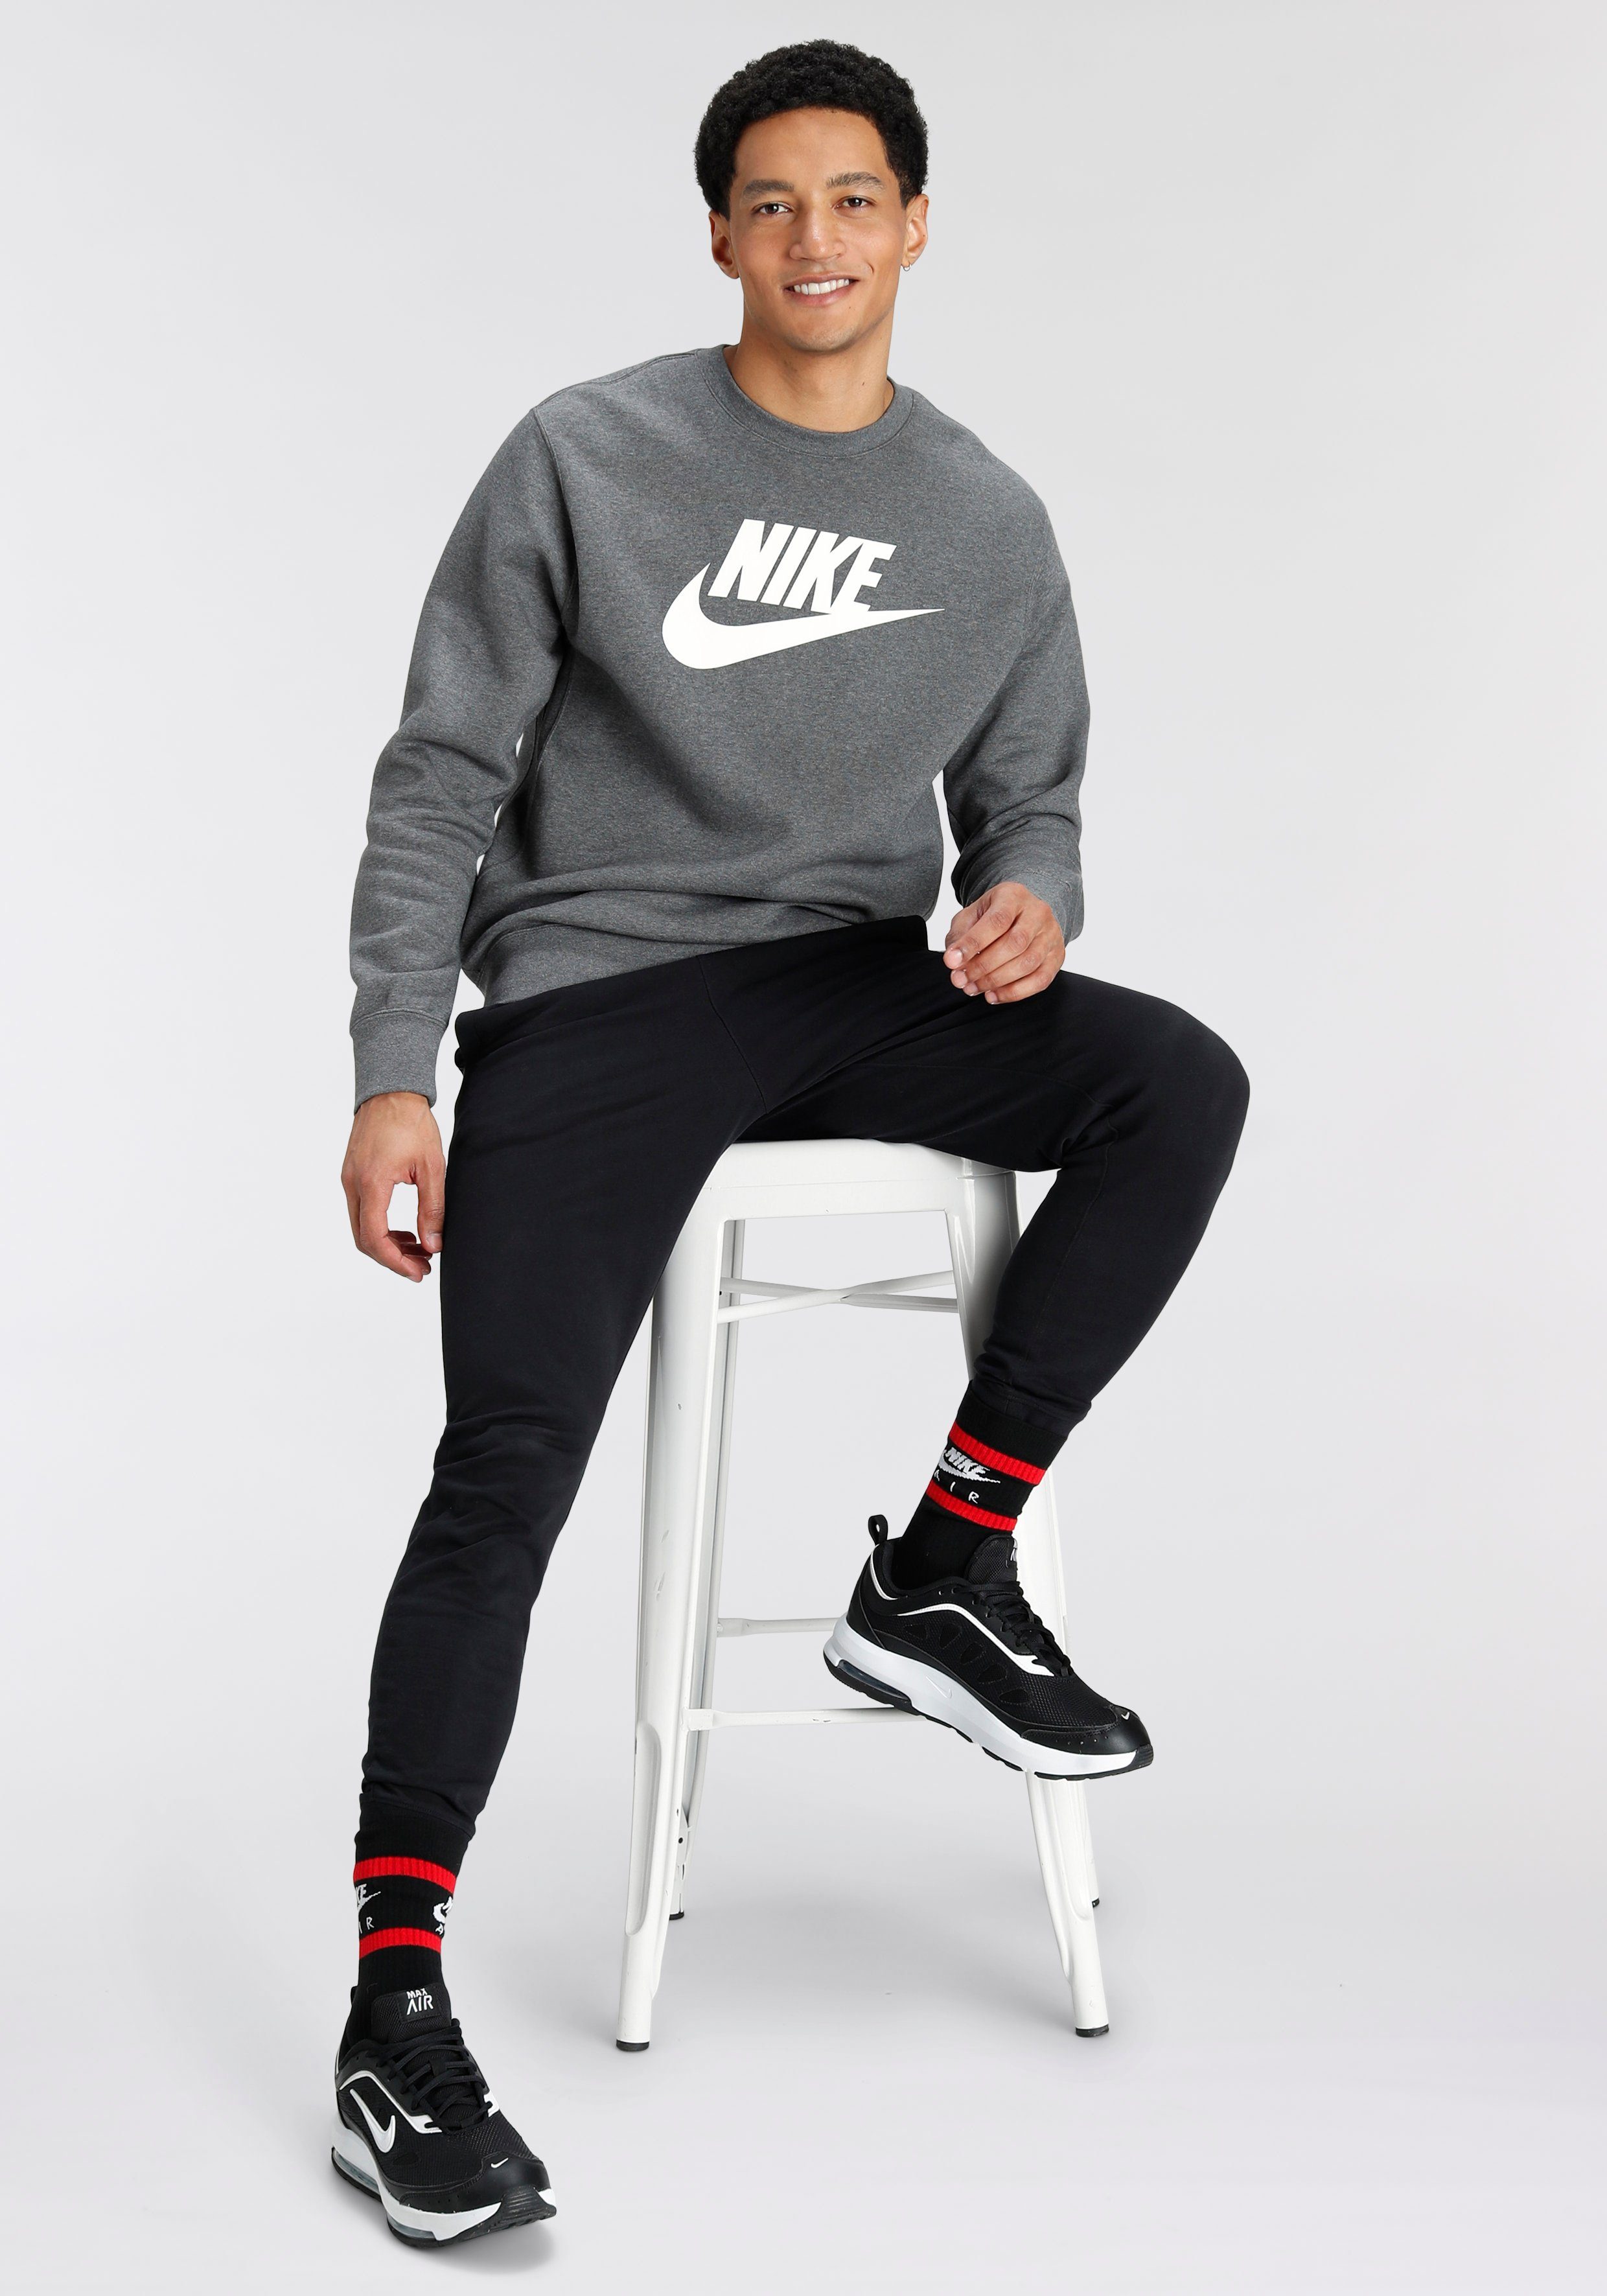 HEATHR Crew Sweatshirt Men's Sportswear Nike CHARCOAL Club Graphic Fleece